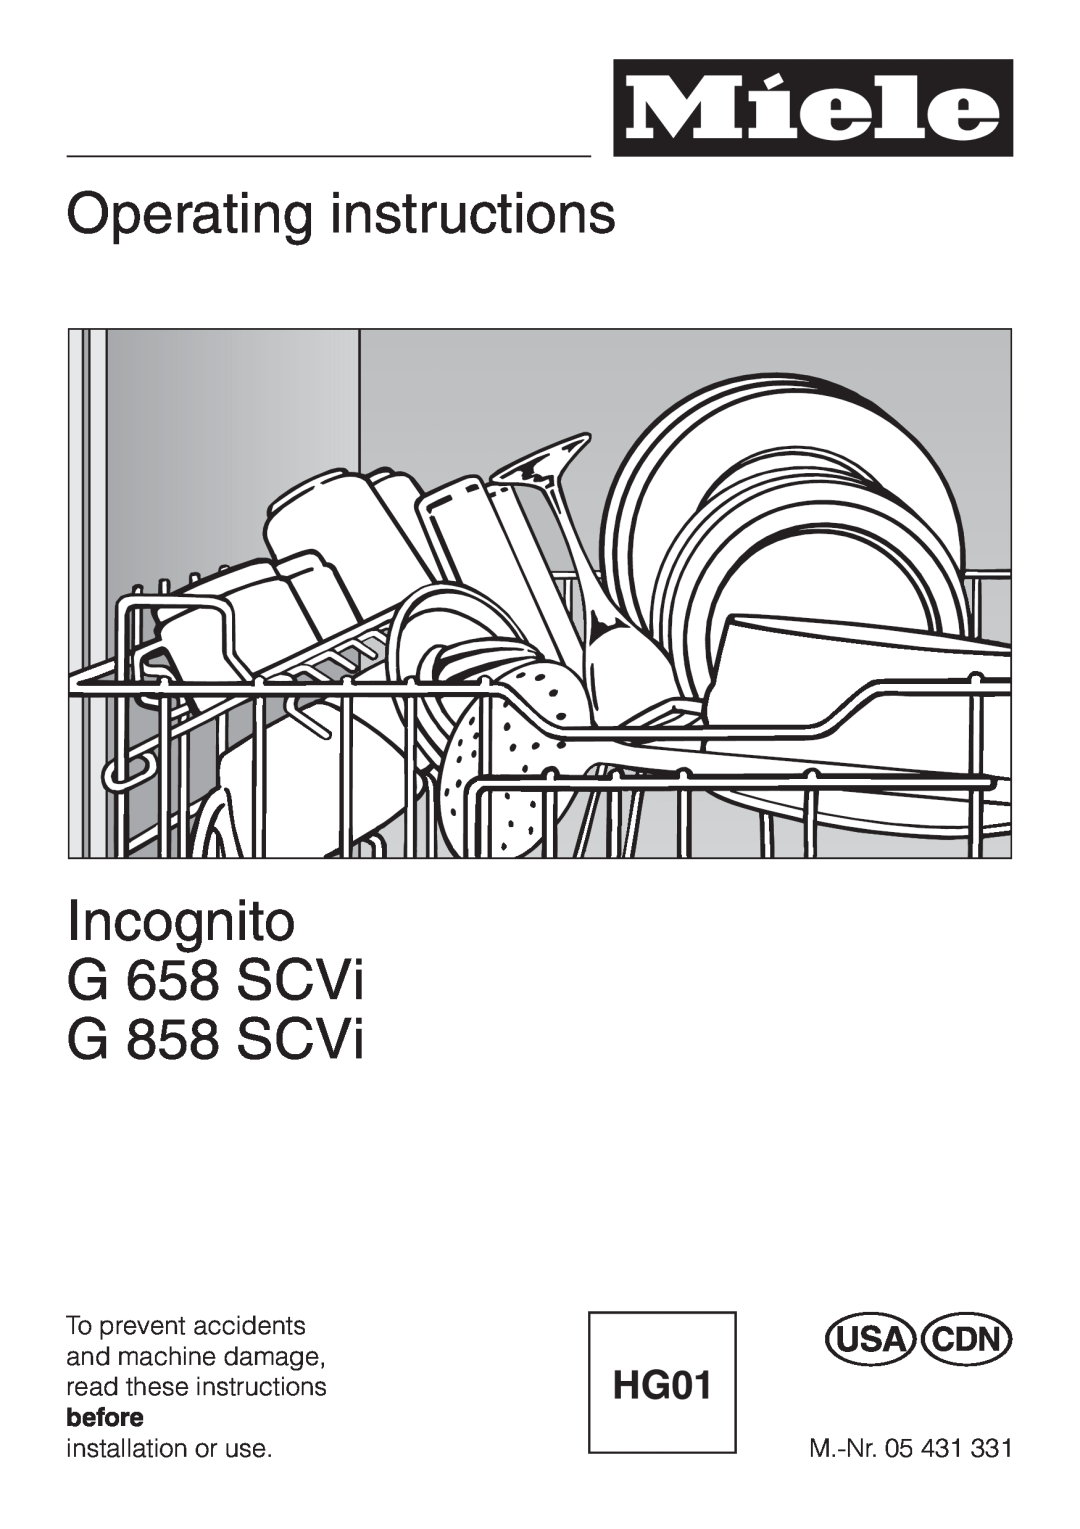 Miele Incognito manual Operating instructions, G 658 SCVi, G 858 SCVi 